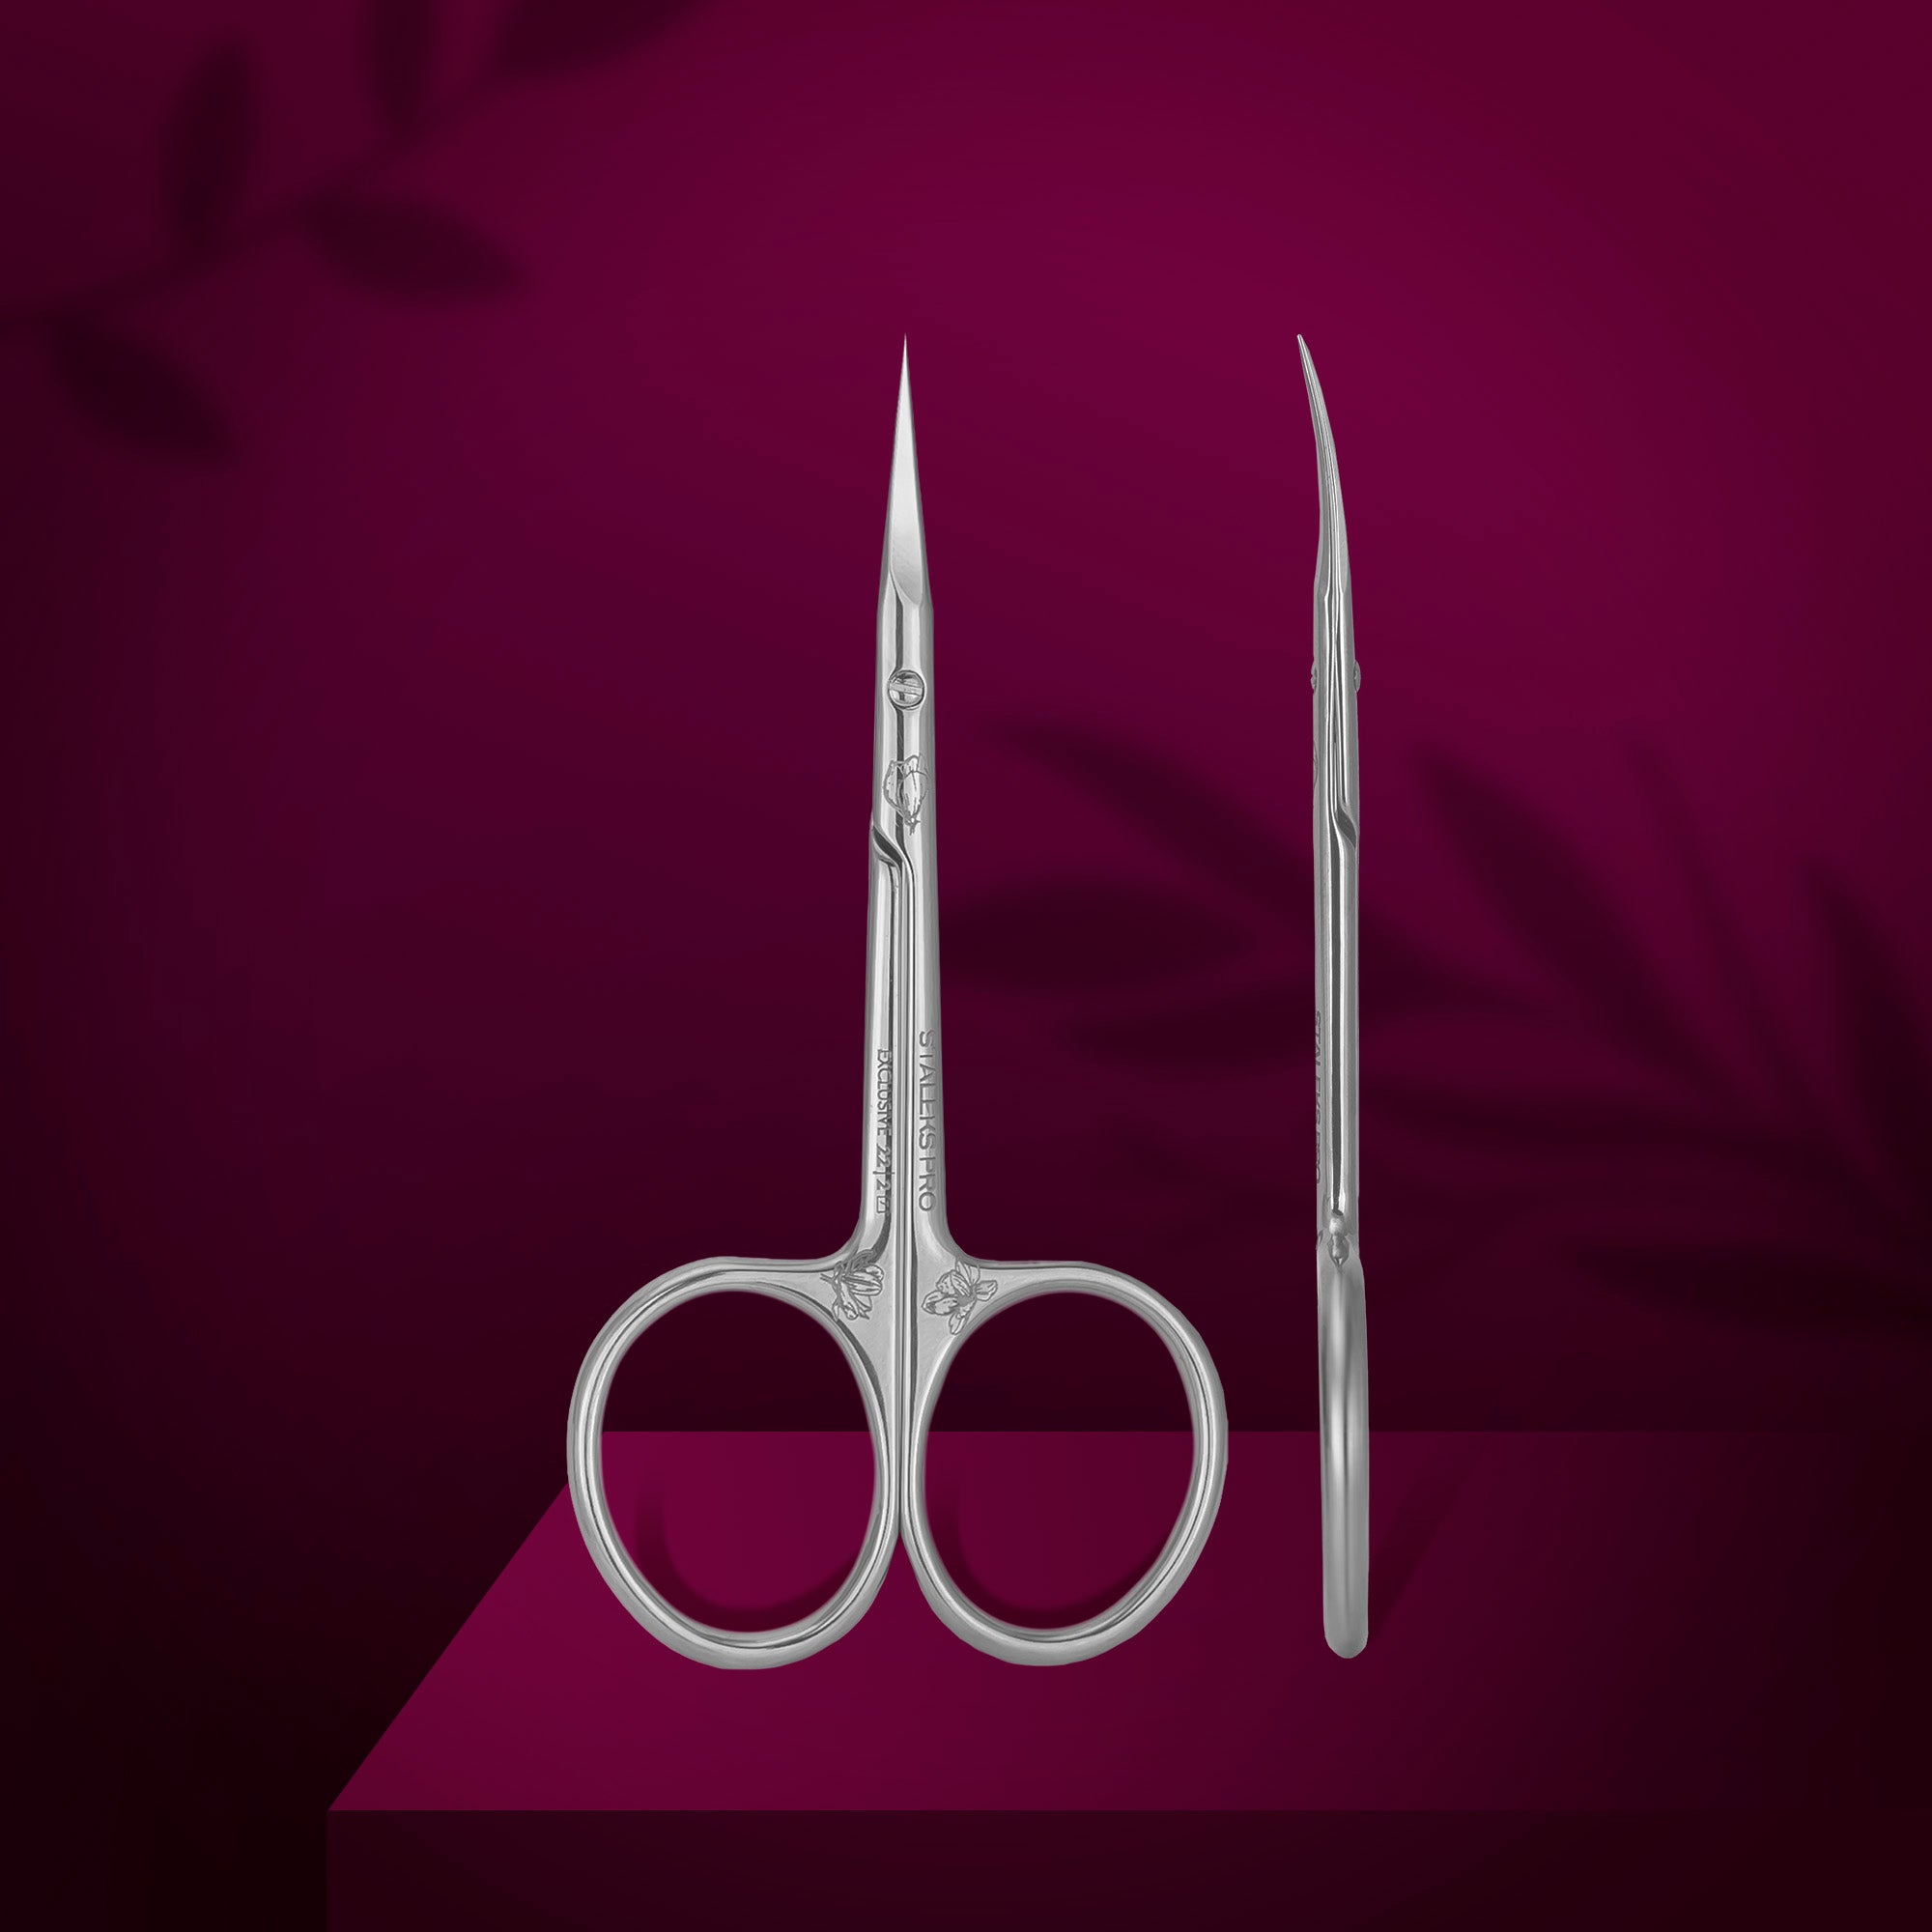 Staleks Pro Cuticle Scissors - Exclusive